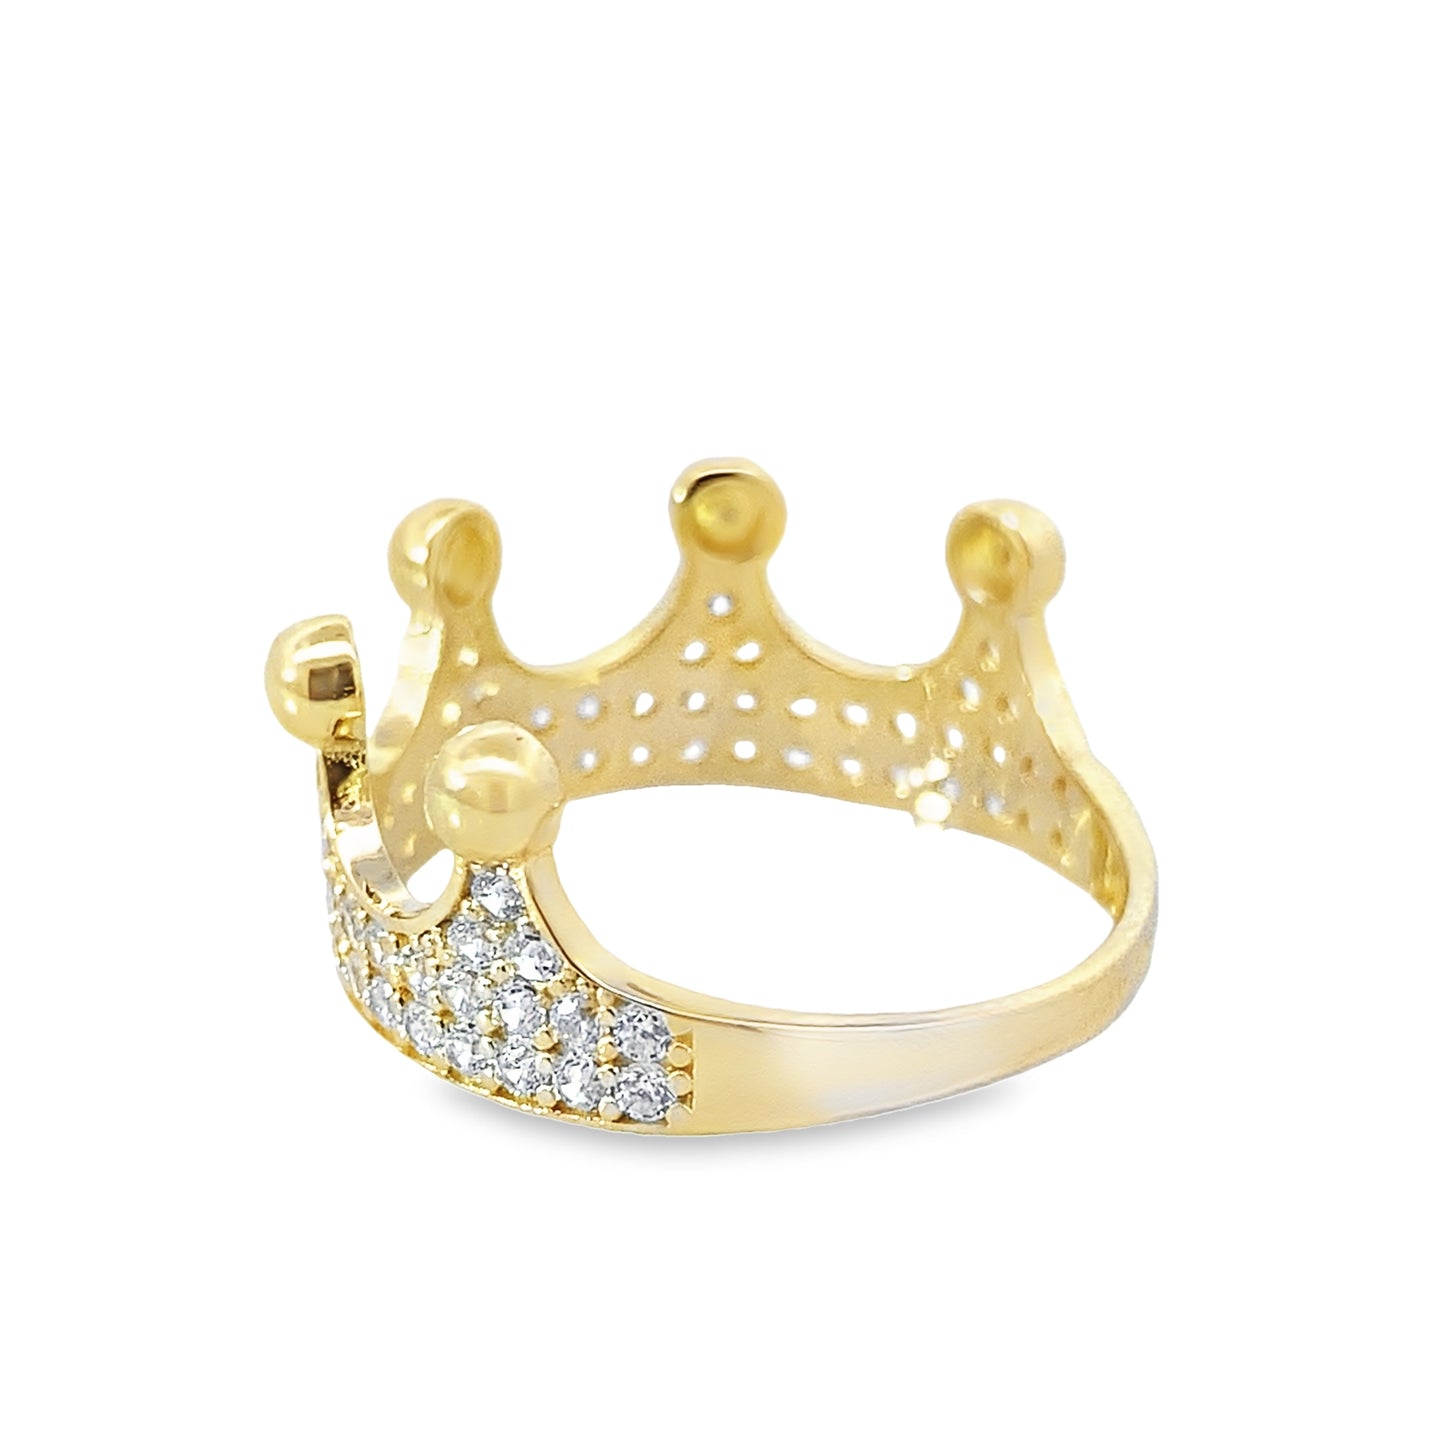 14K Yellow Gold Cz Crown Lds Fashion Ring Size 7